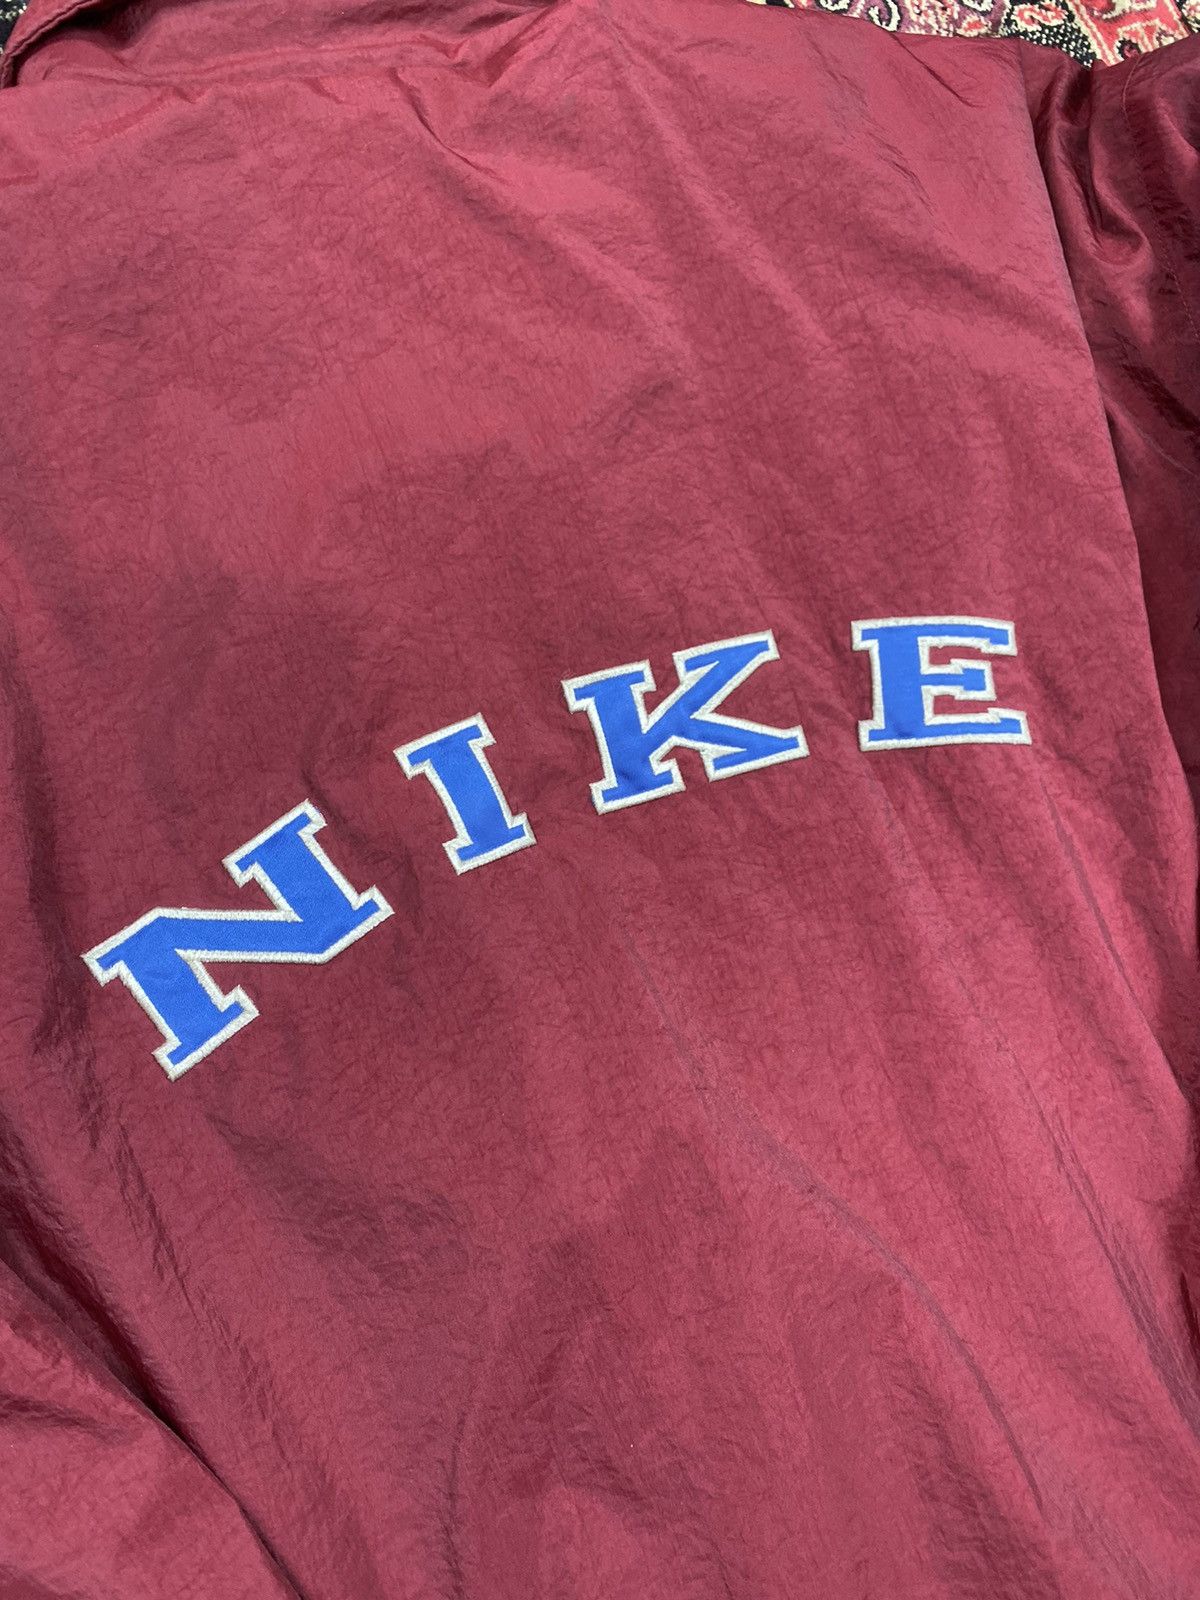 Nike Vintage Nike Bomber Jacket Sherpa Lined Size US L / EU 52-54 / 3 - 5 Thumbnail